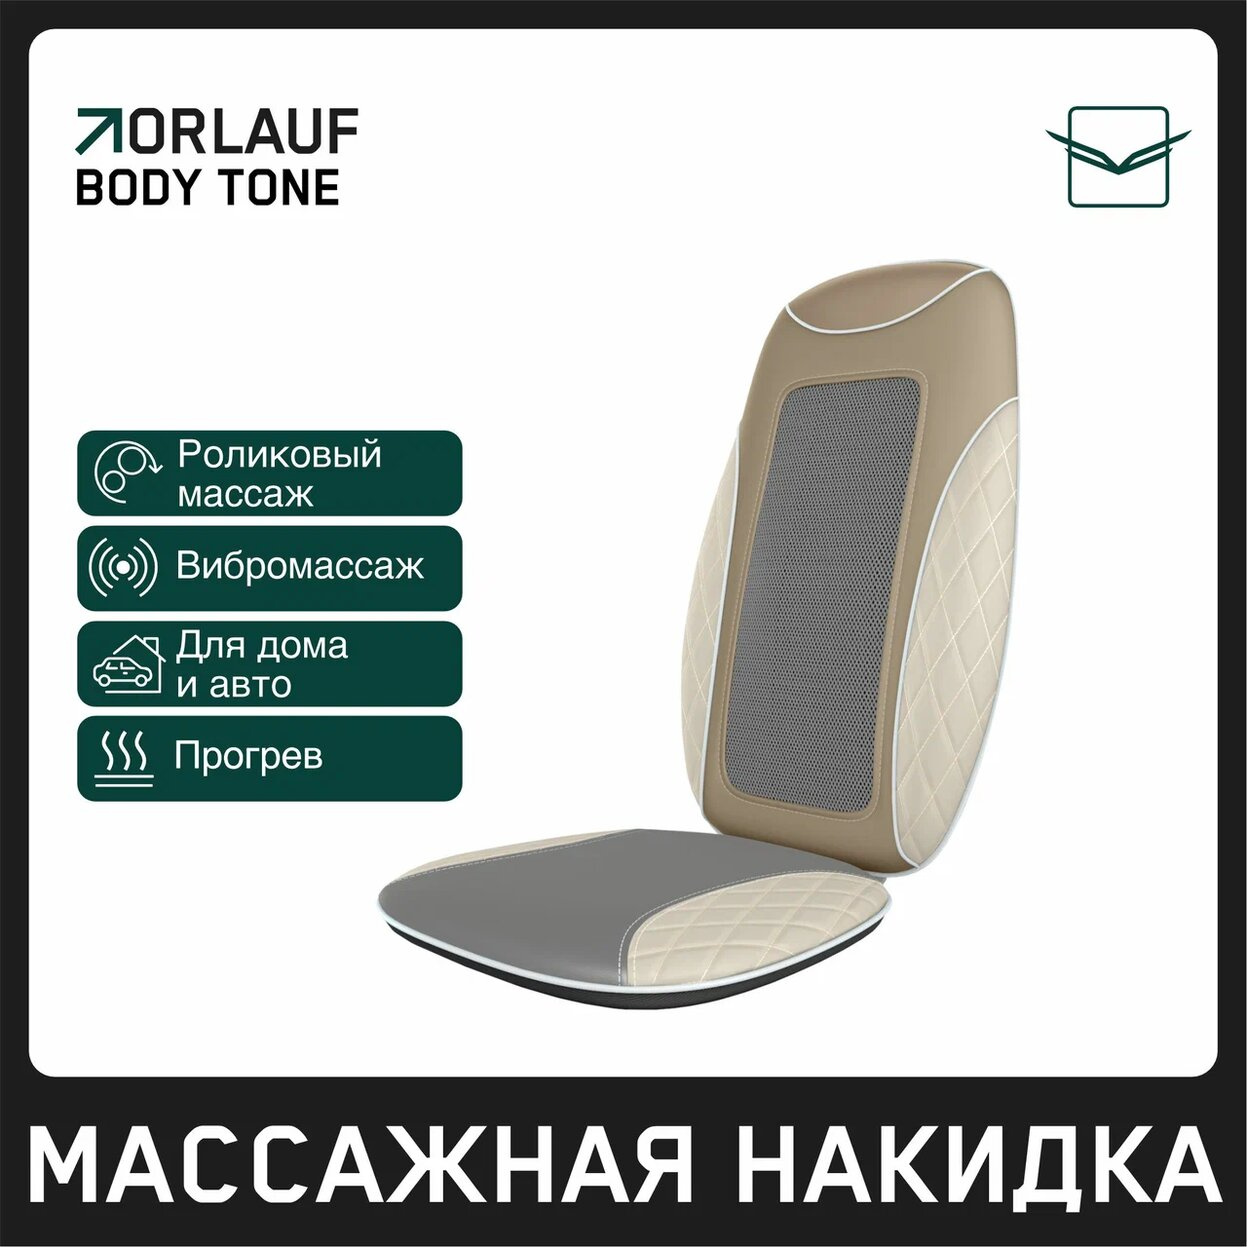 Orlauf Body Tone из каталога устройств для массажа в Перми по цене 15400 ₽